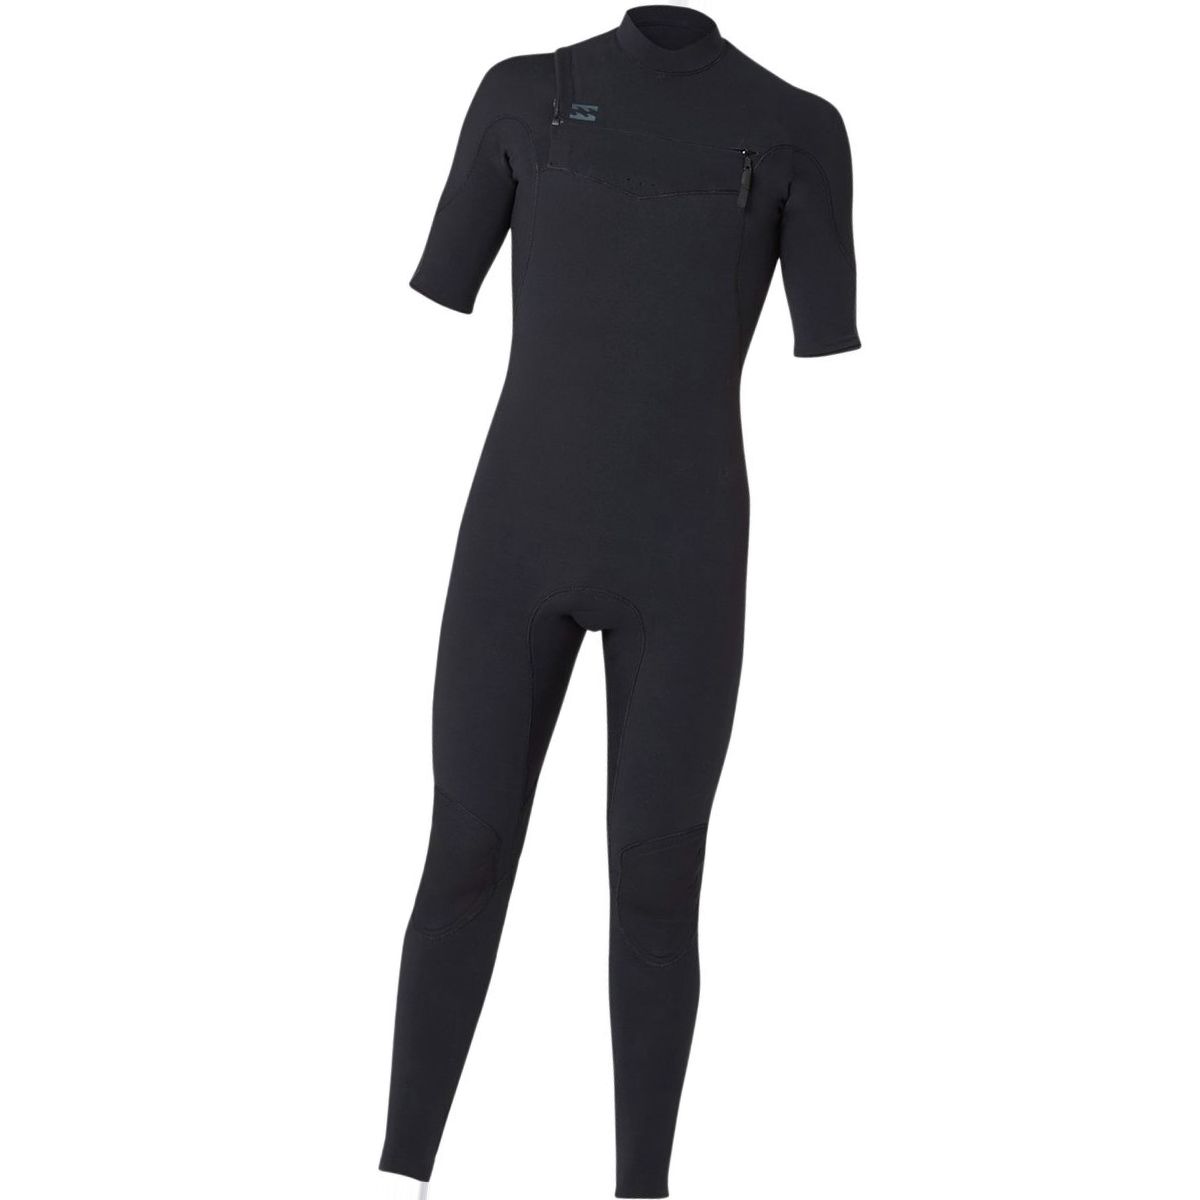 Billabong 2mm Furnace Carbon Comp Short-Sleeve Chest Zip Full Wetsuit - Men's